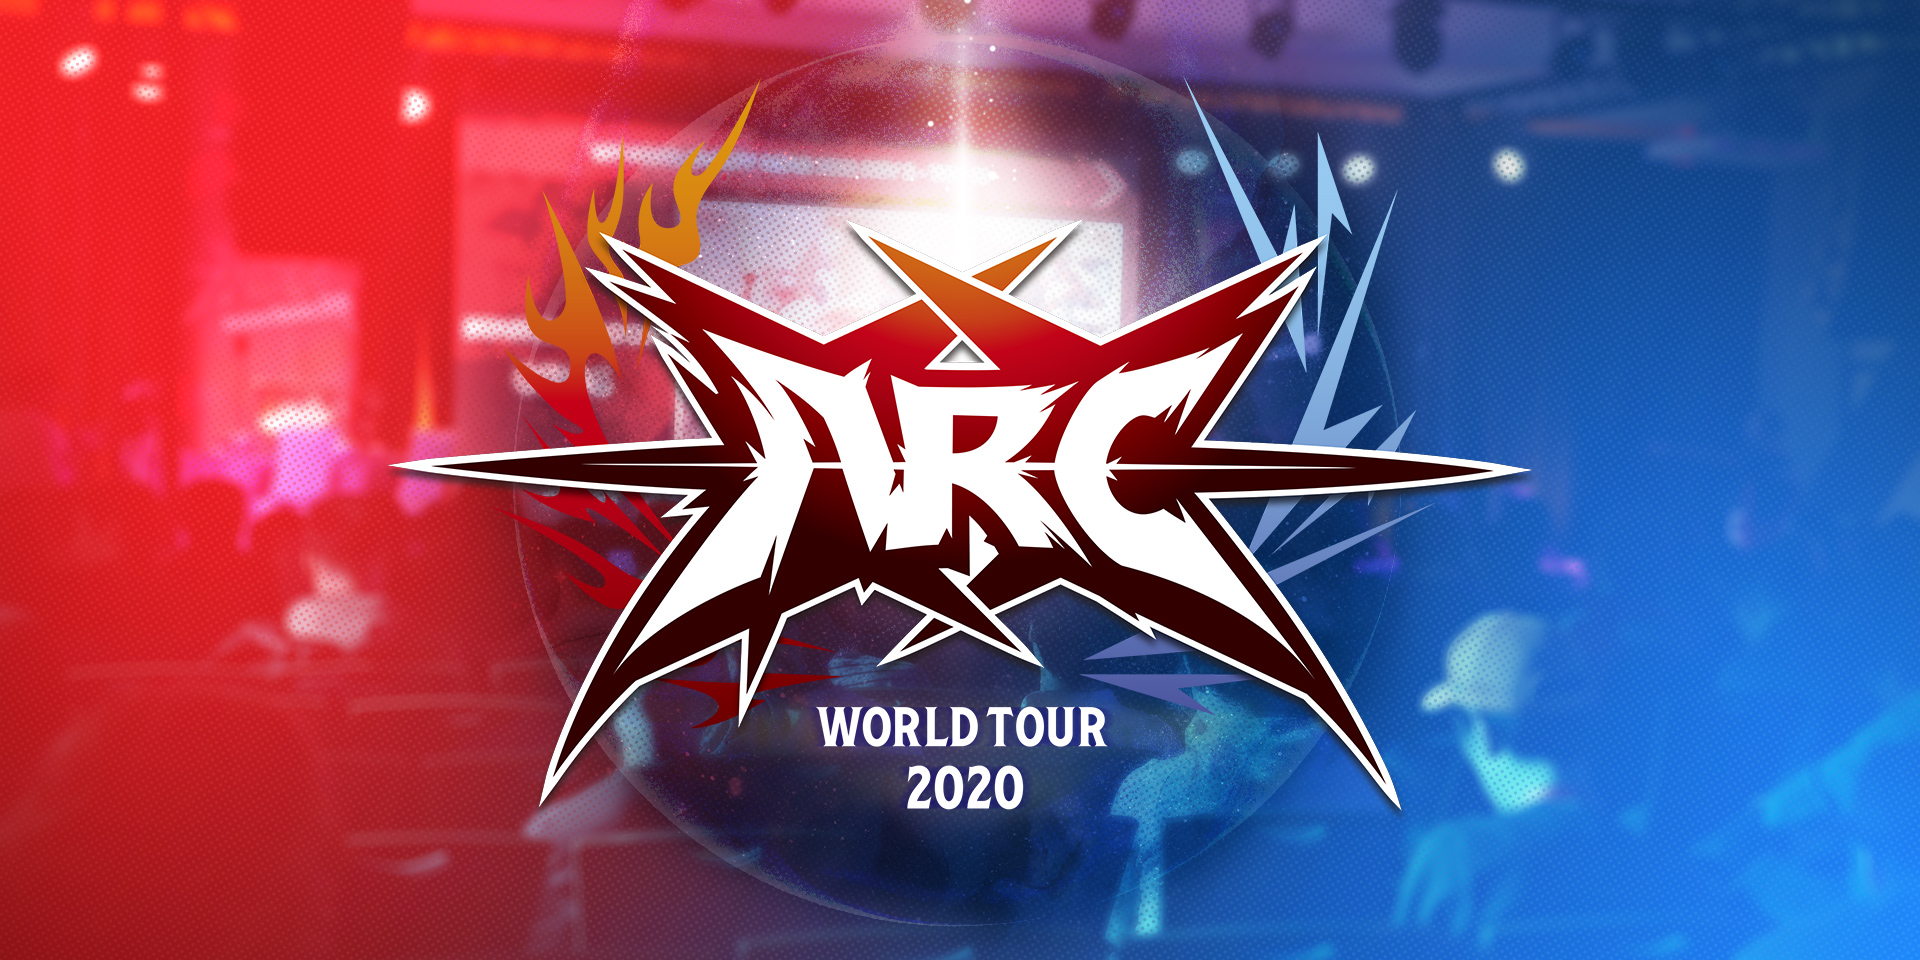 PSA Regarding Arc World Tour 2020 Stop Final Round